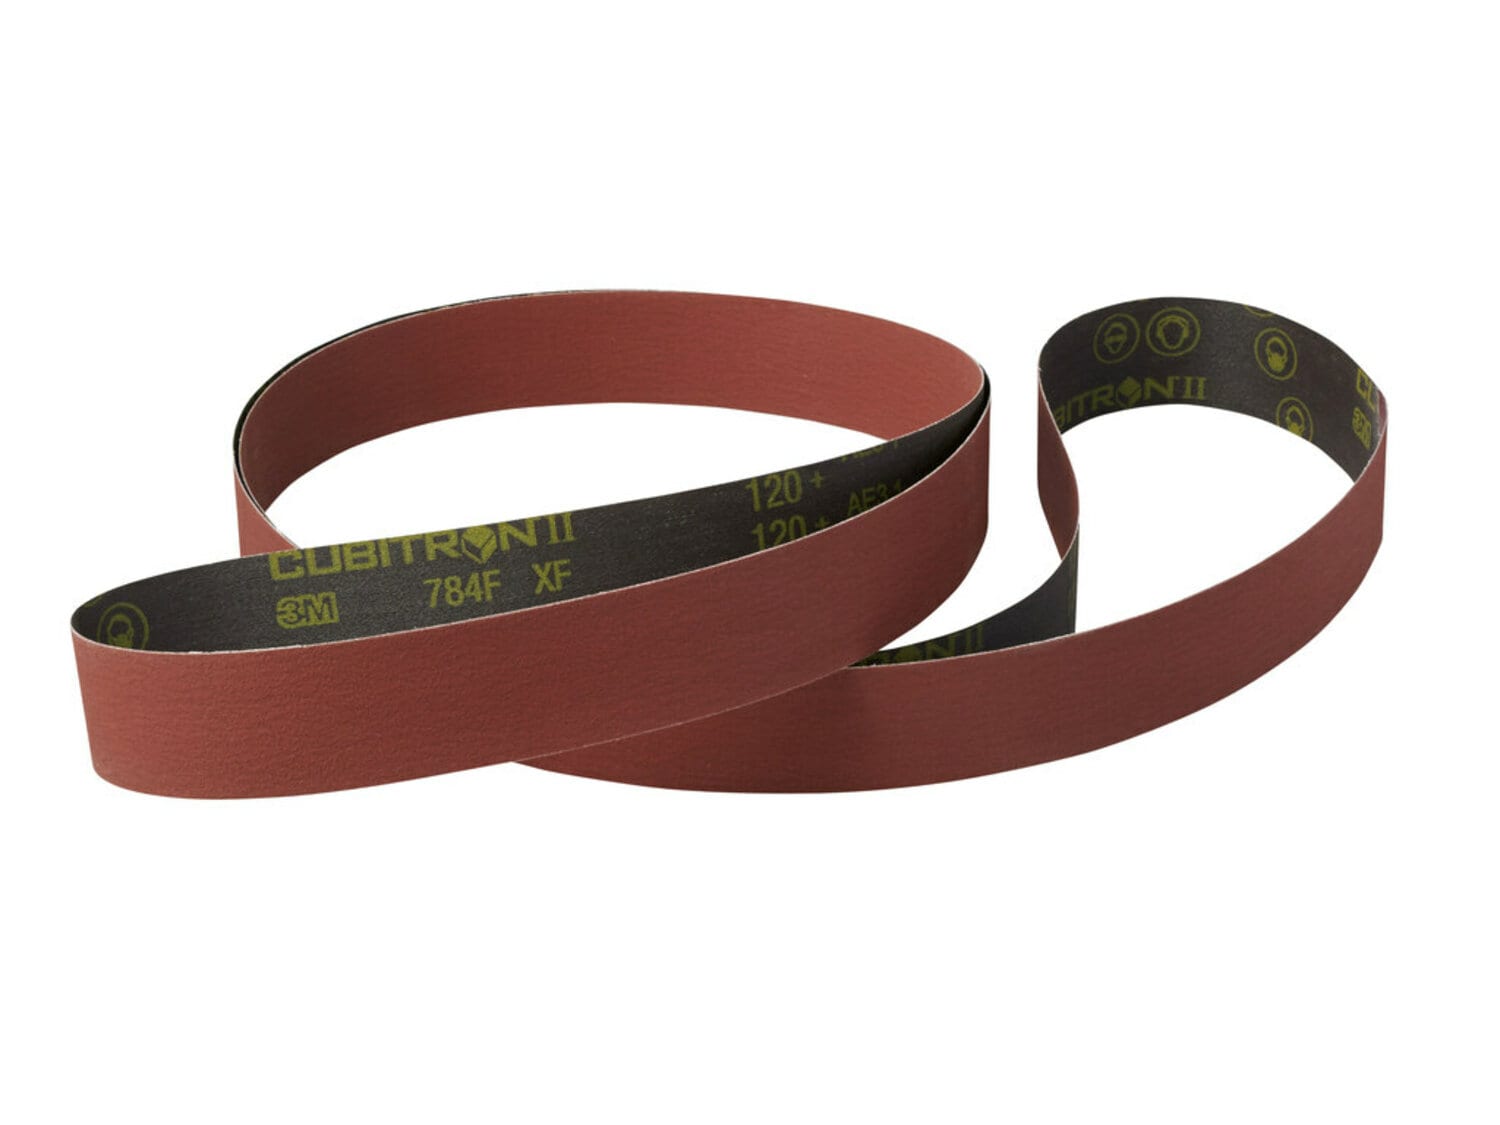 7100211147 - 3M Cubitron ll Cloth Belt 784F, 36+ YF-weight, 2 in x 108 in, Film-lok, Single-flex